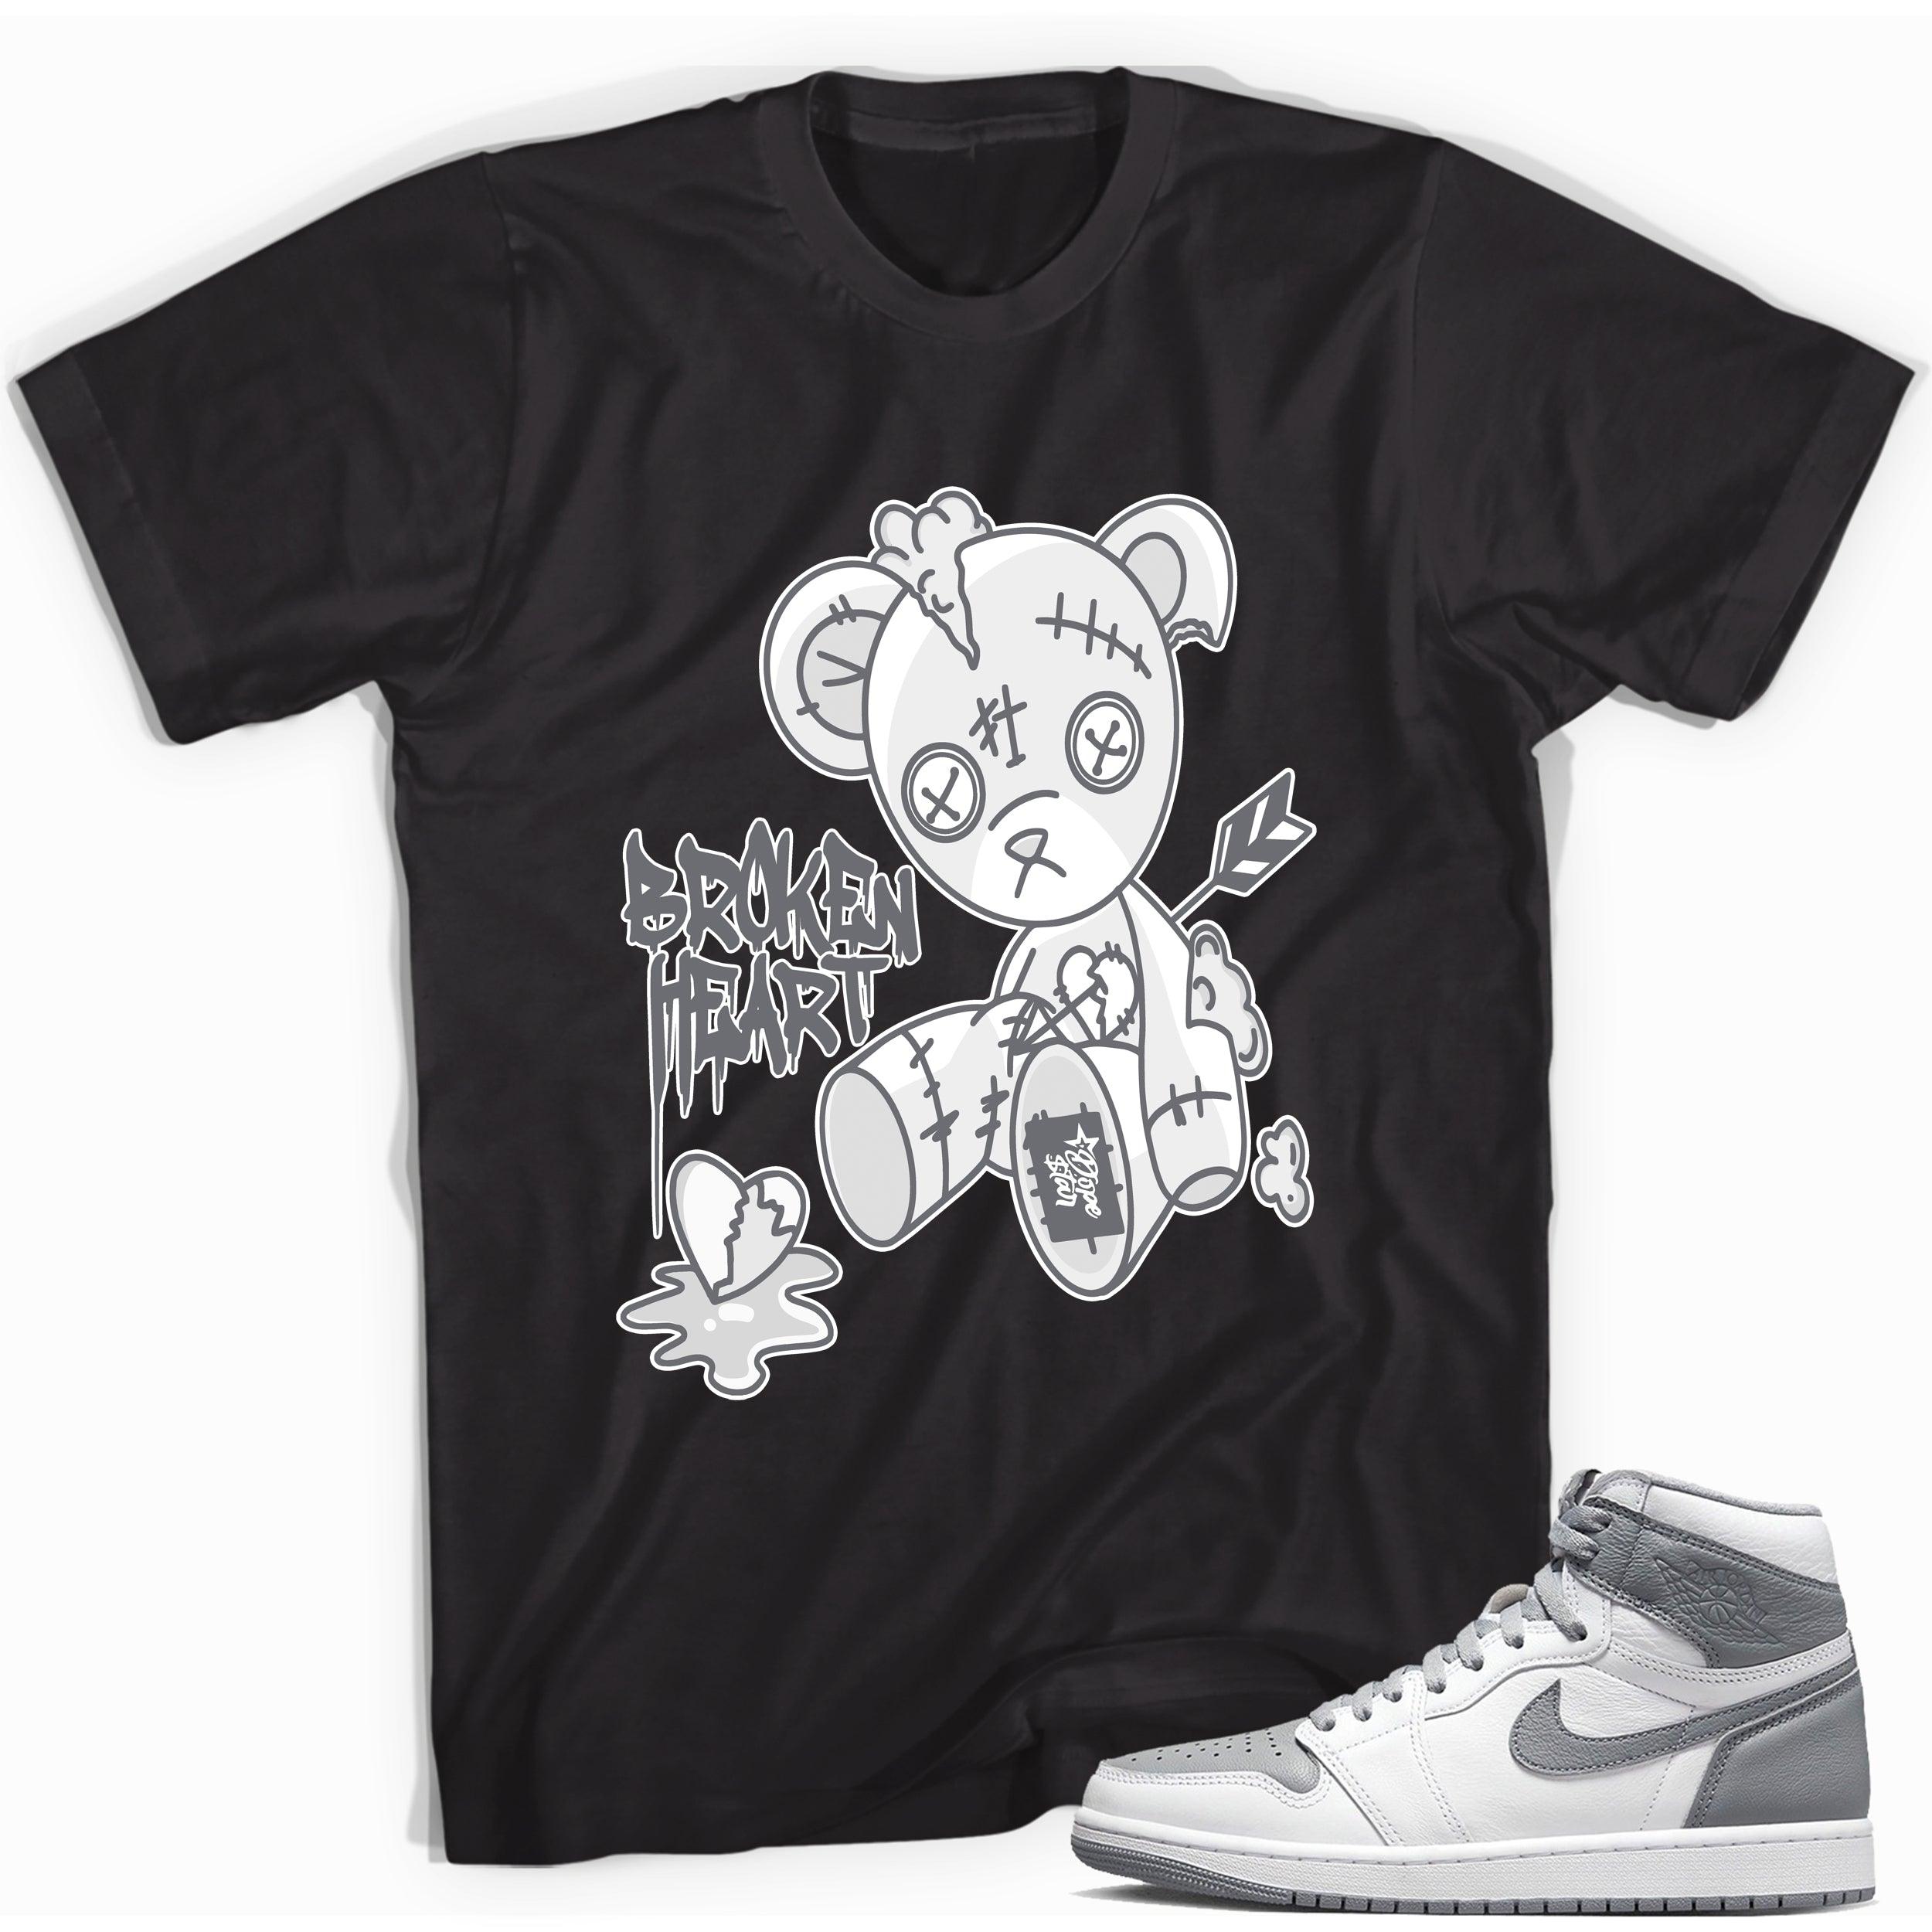 Jordan 1s High OG Stealth Shirt - Broken Heart Bear - Sneaker Shirts Outlet